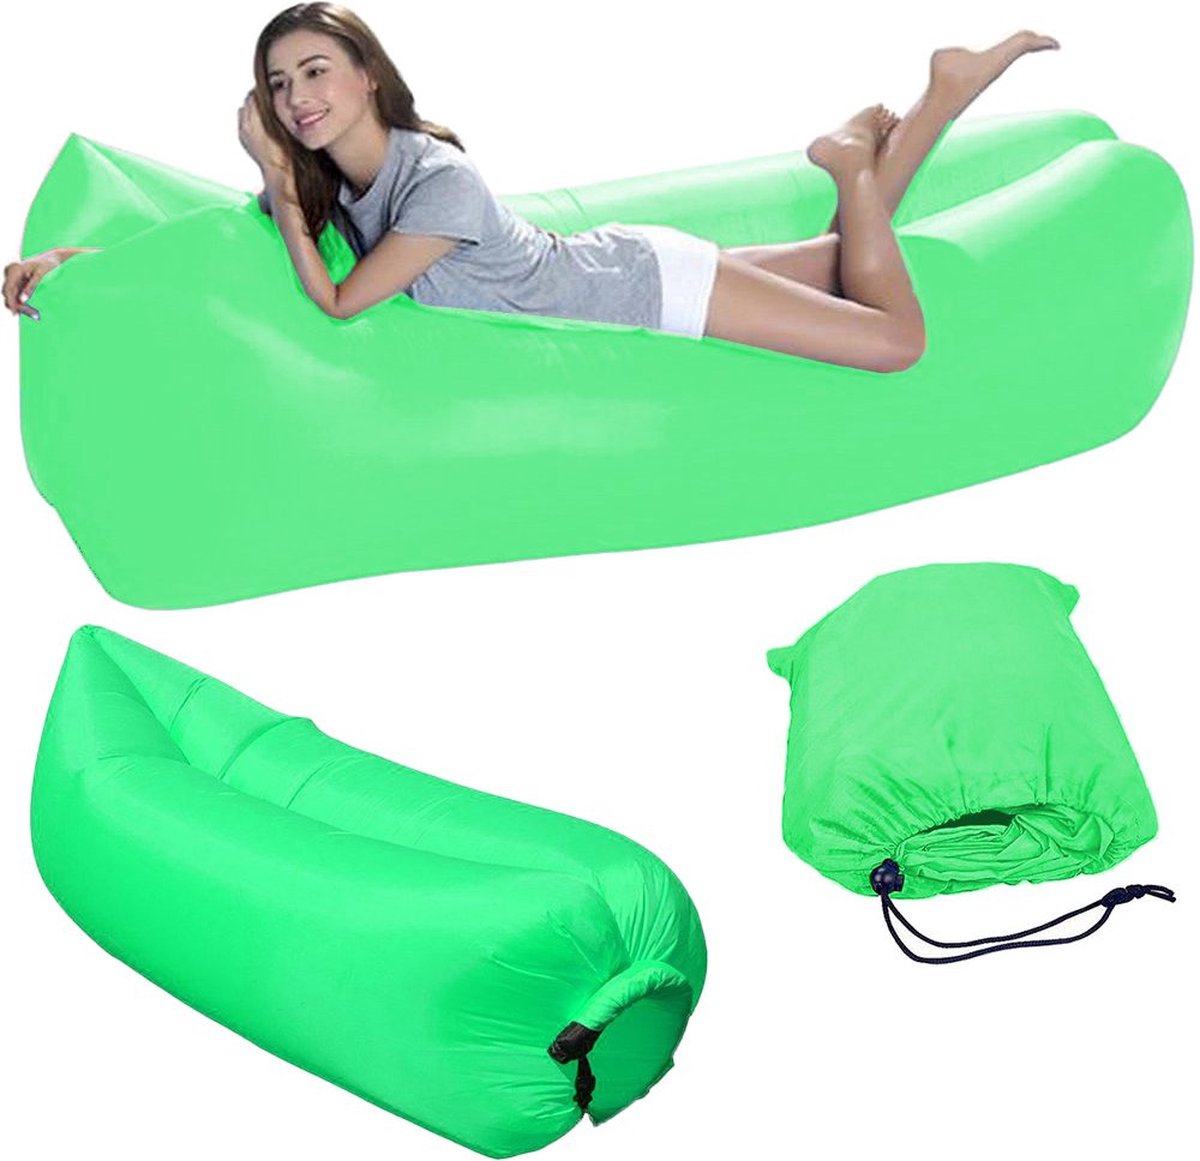 Opblaasbare zitzak groen - Volwassenen luchtbed - Air lounger - Luchtzak 220x70 cm - Ligzak voor op het strand